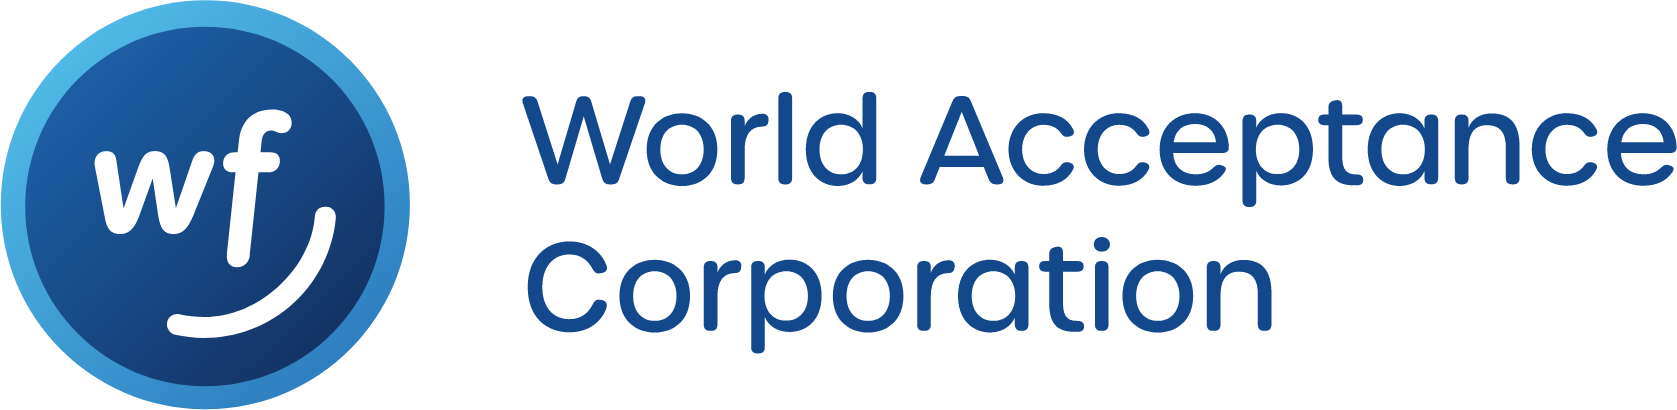 World Acceptance Corporation logo large (transparent PNG)